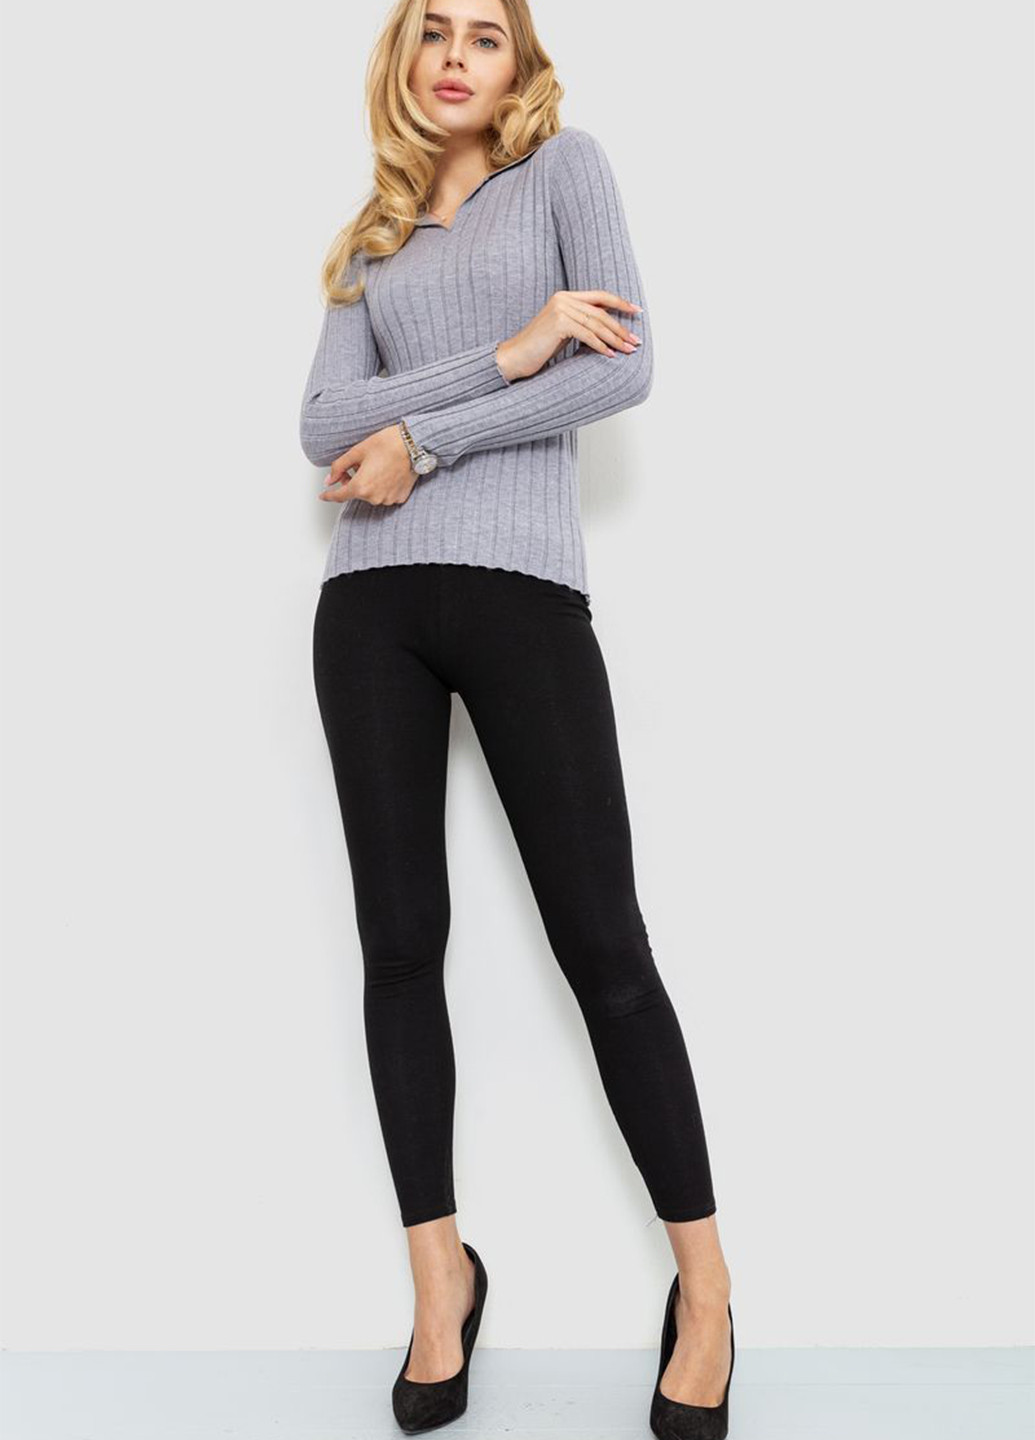 Серый демисезонный пуловер пуловер Ager